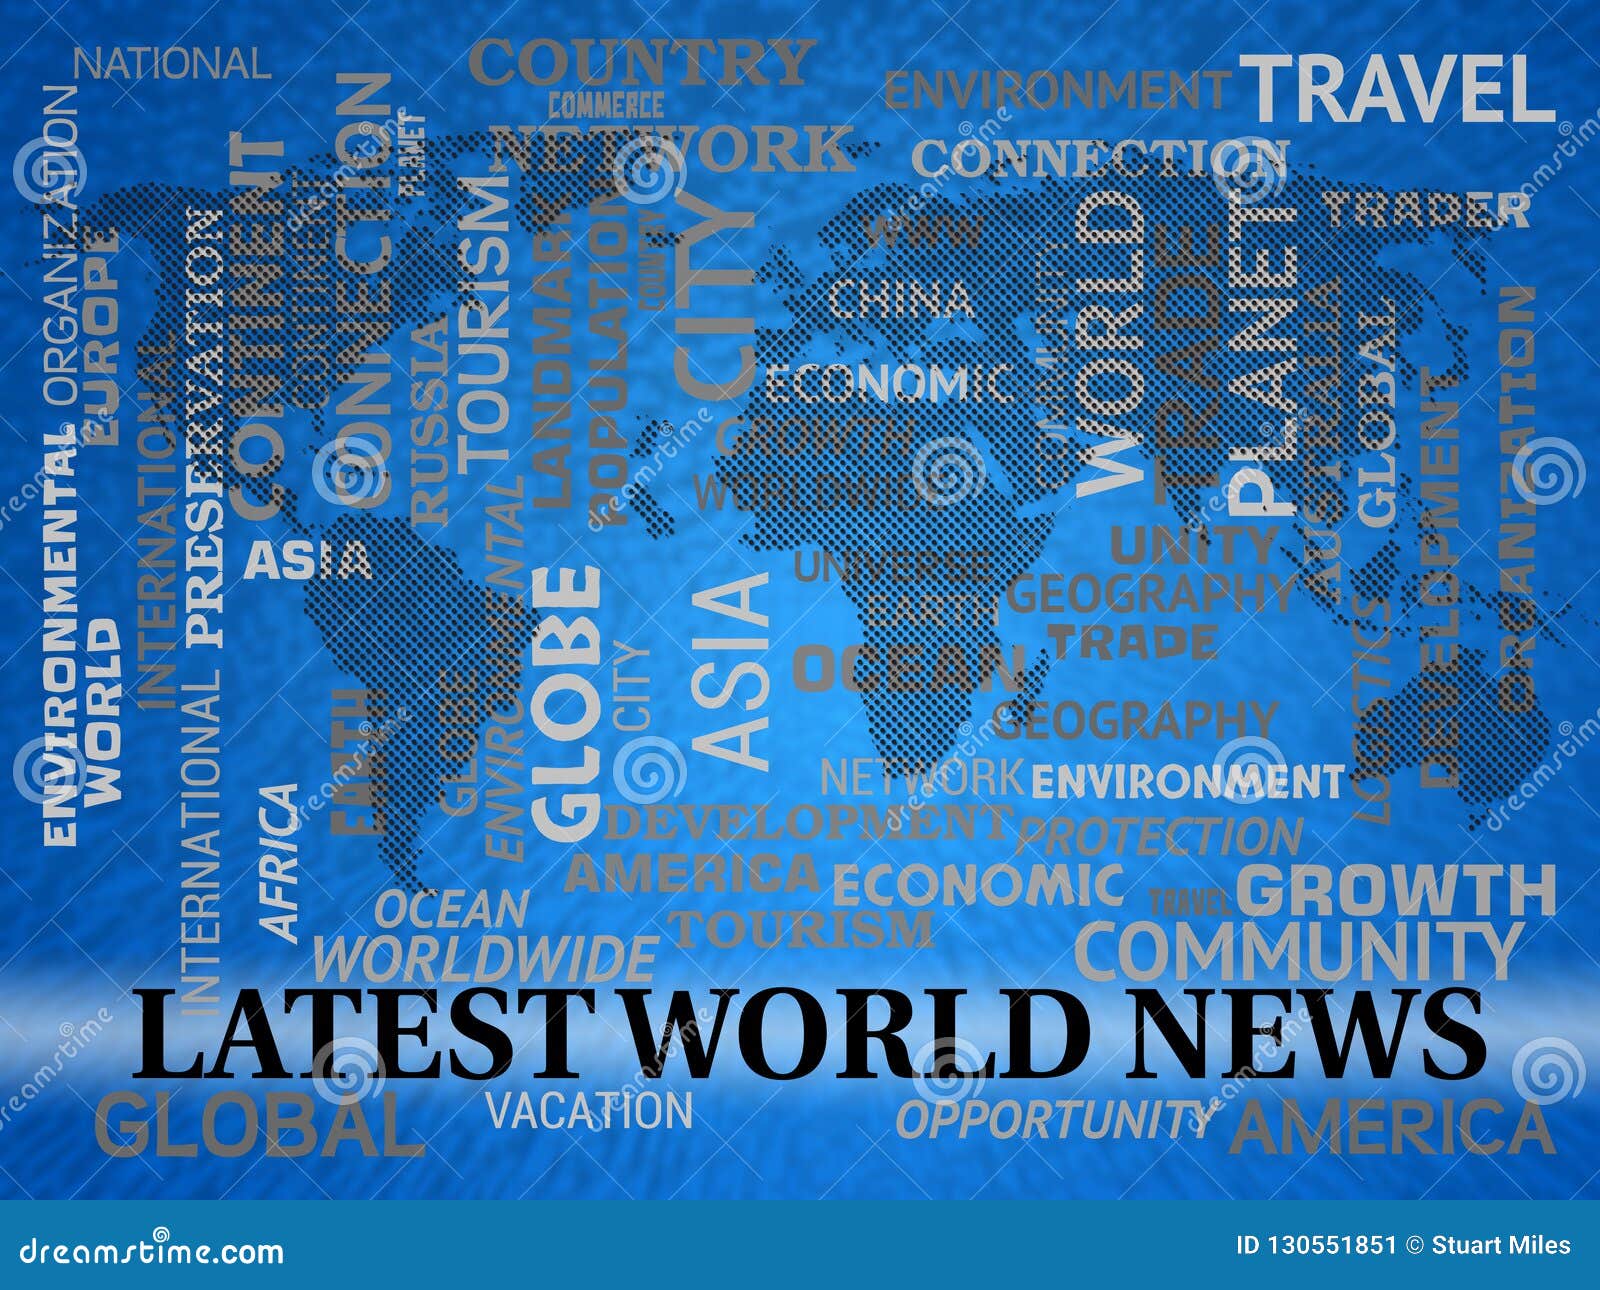 latest world news shows recent international headlines